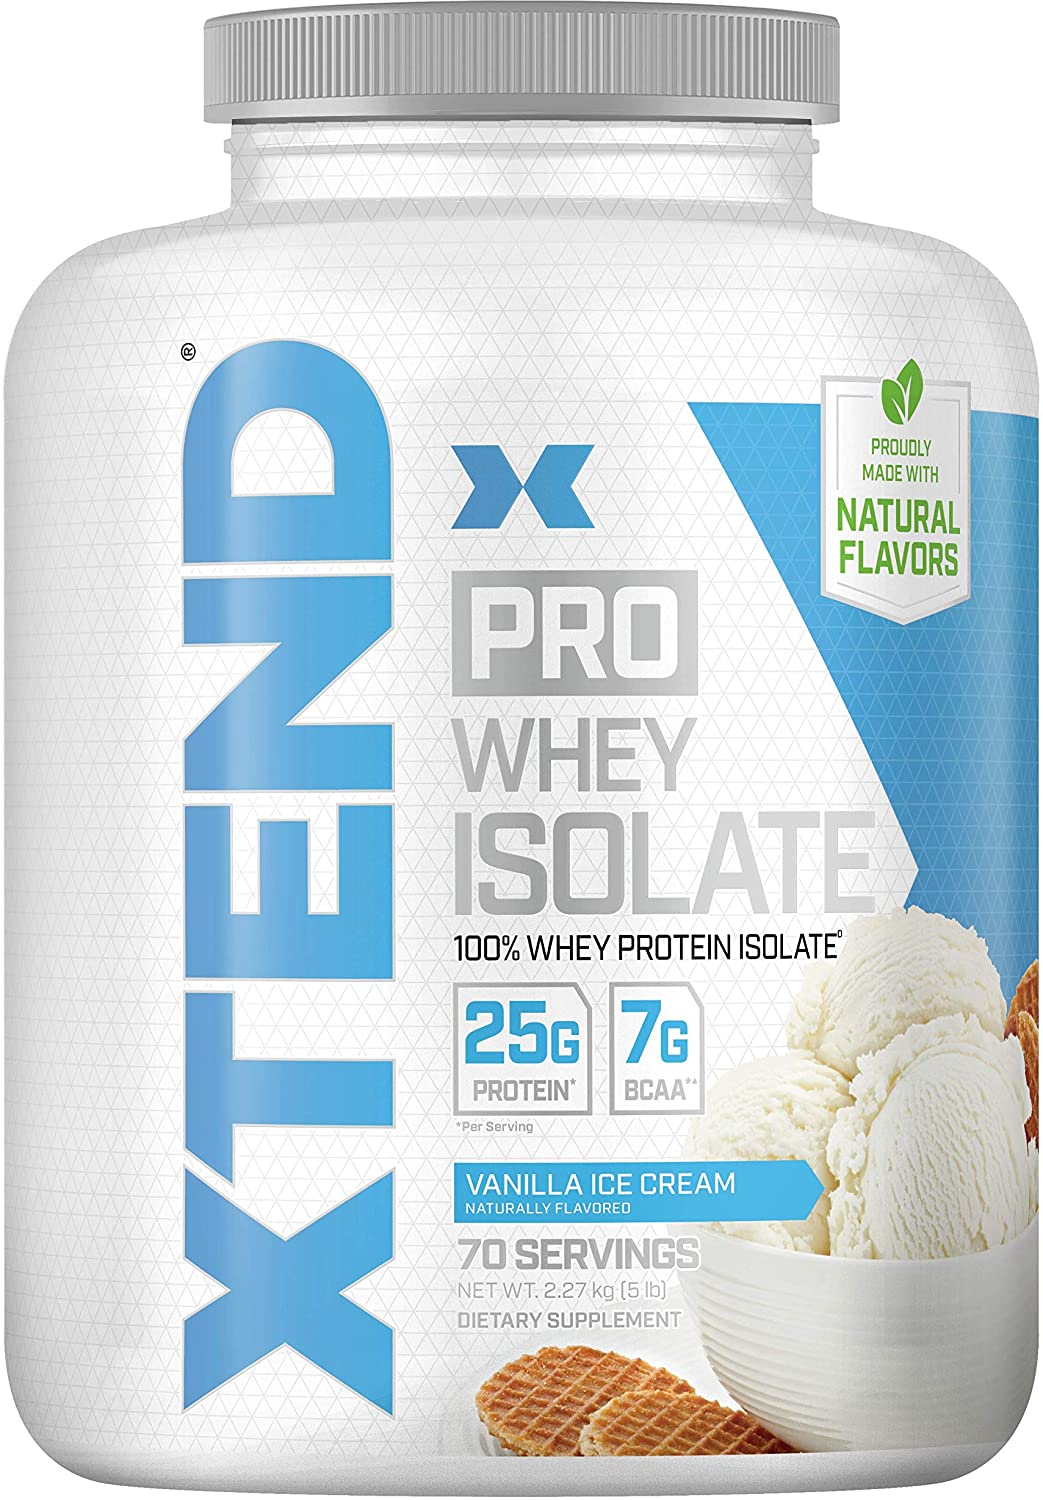 XTEND Pro Protein Powder Vanilla Ice Cream Whey Isolate 5lbs - $35.69 + FS